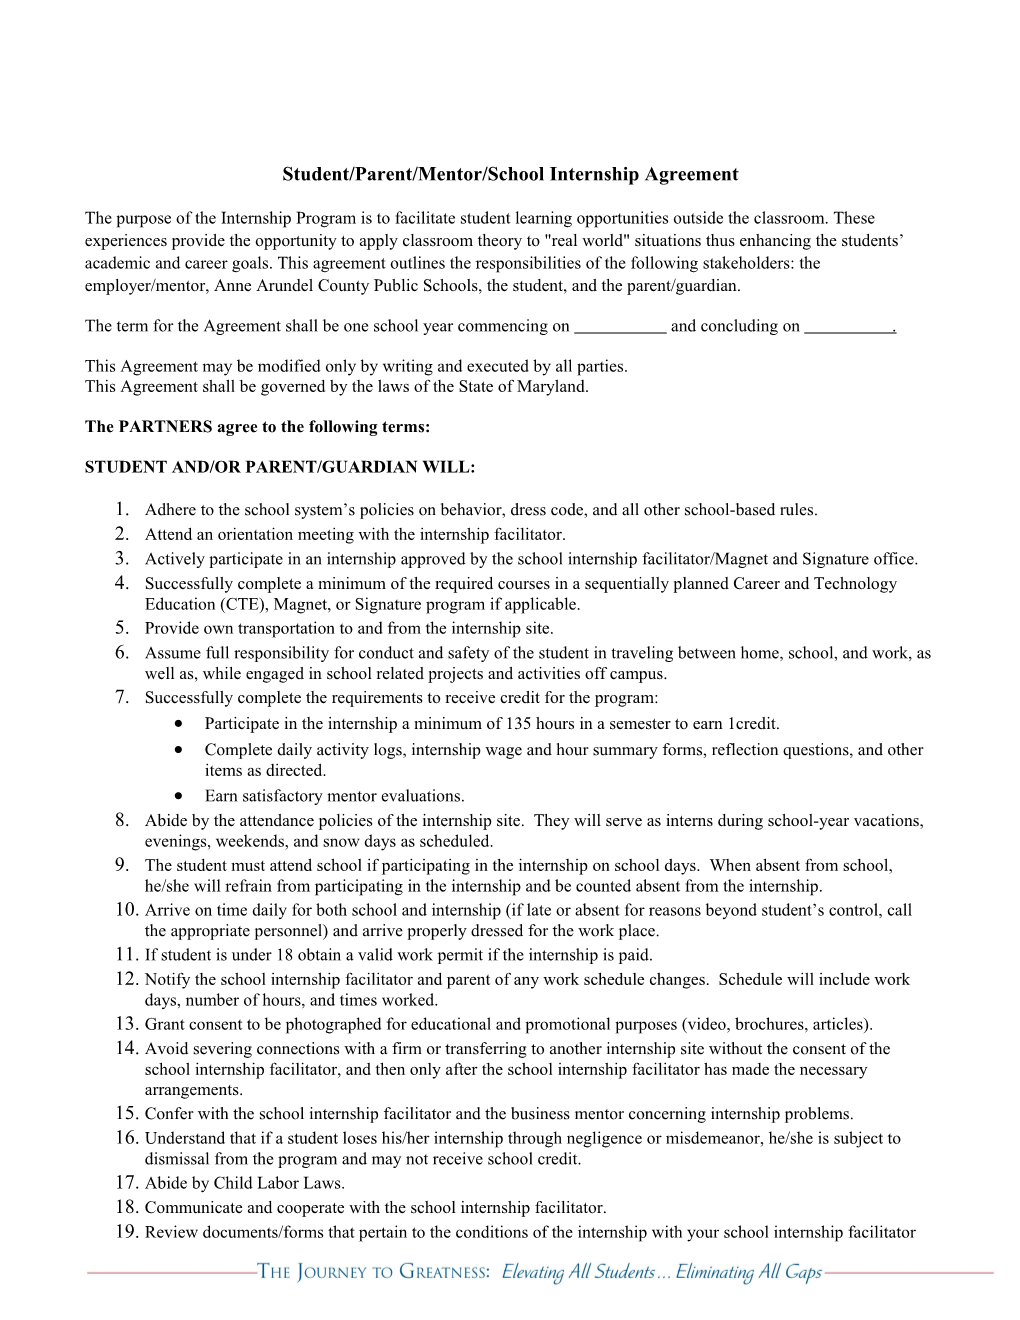 Student/Parent/Mentor/School Internship Agreement